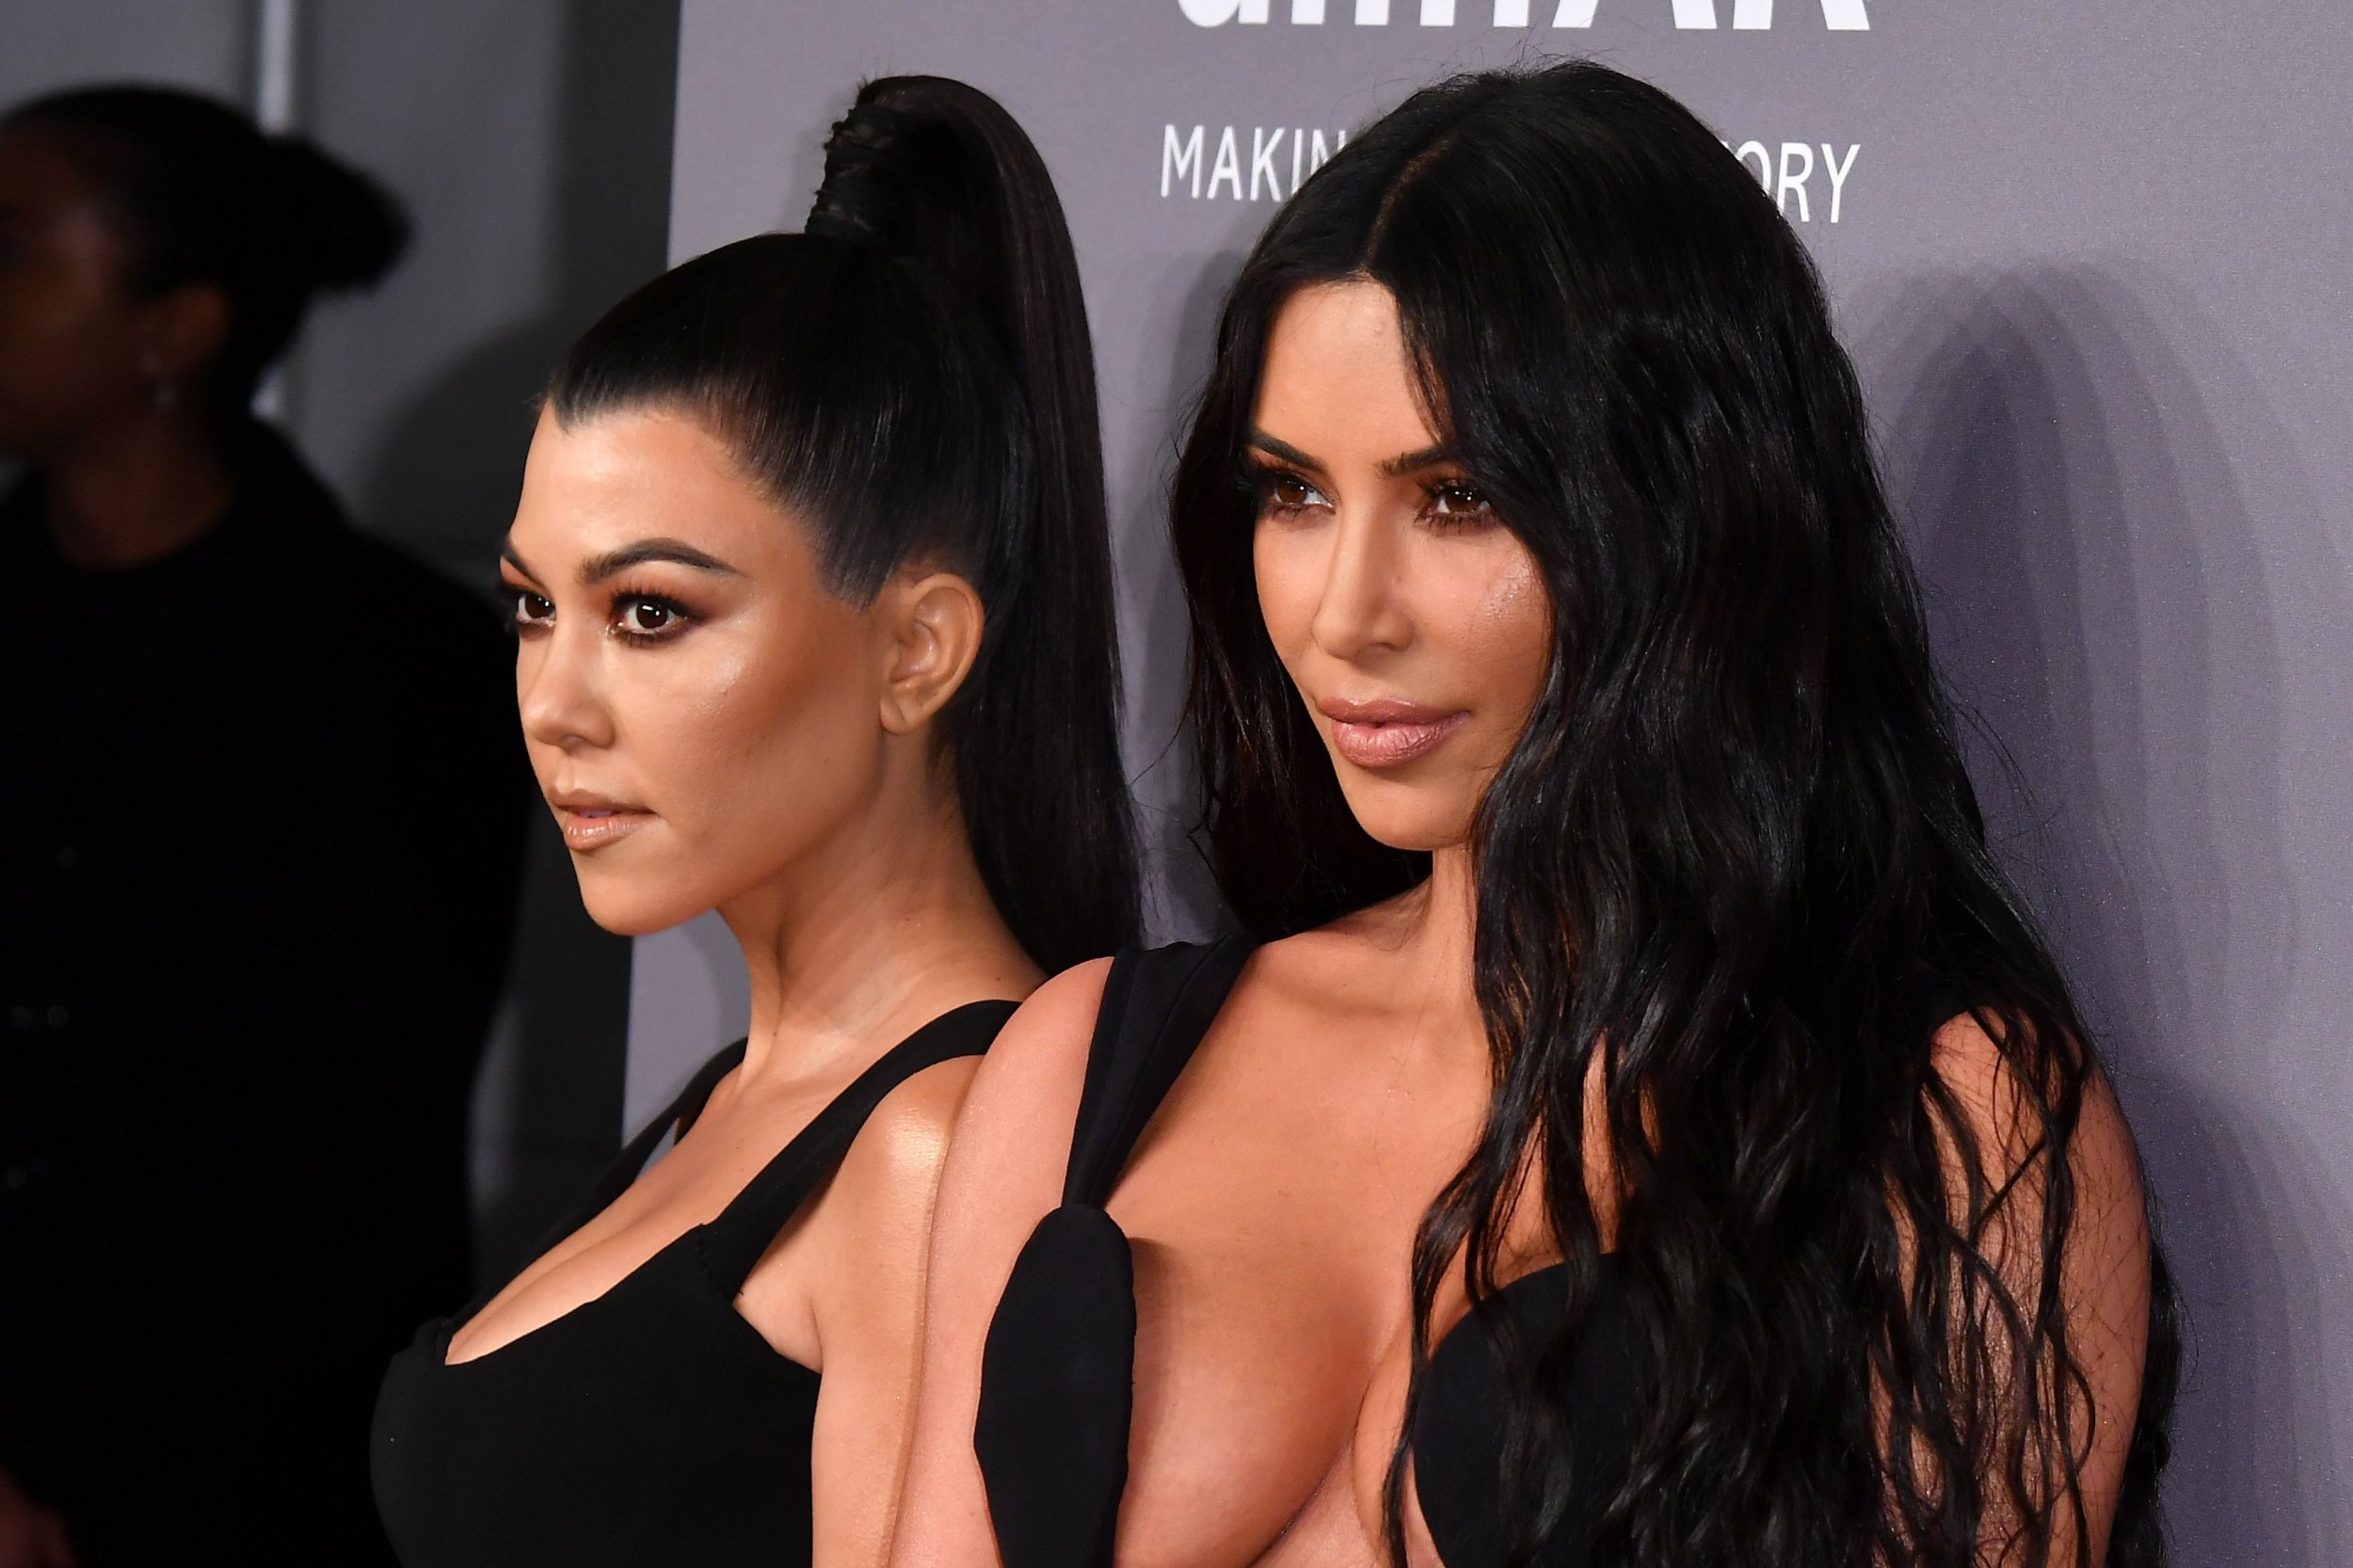 Kardashians Using Drama to Push Show 